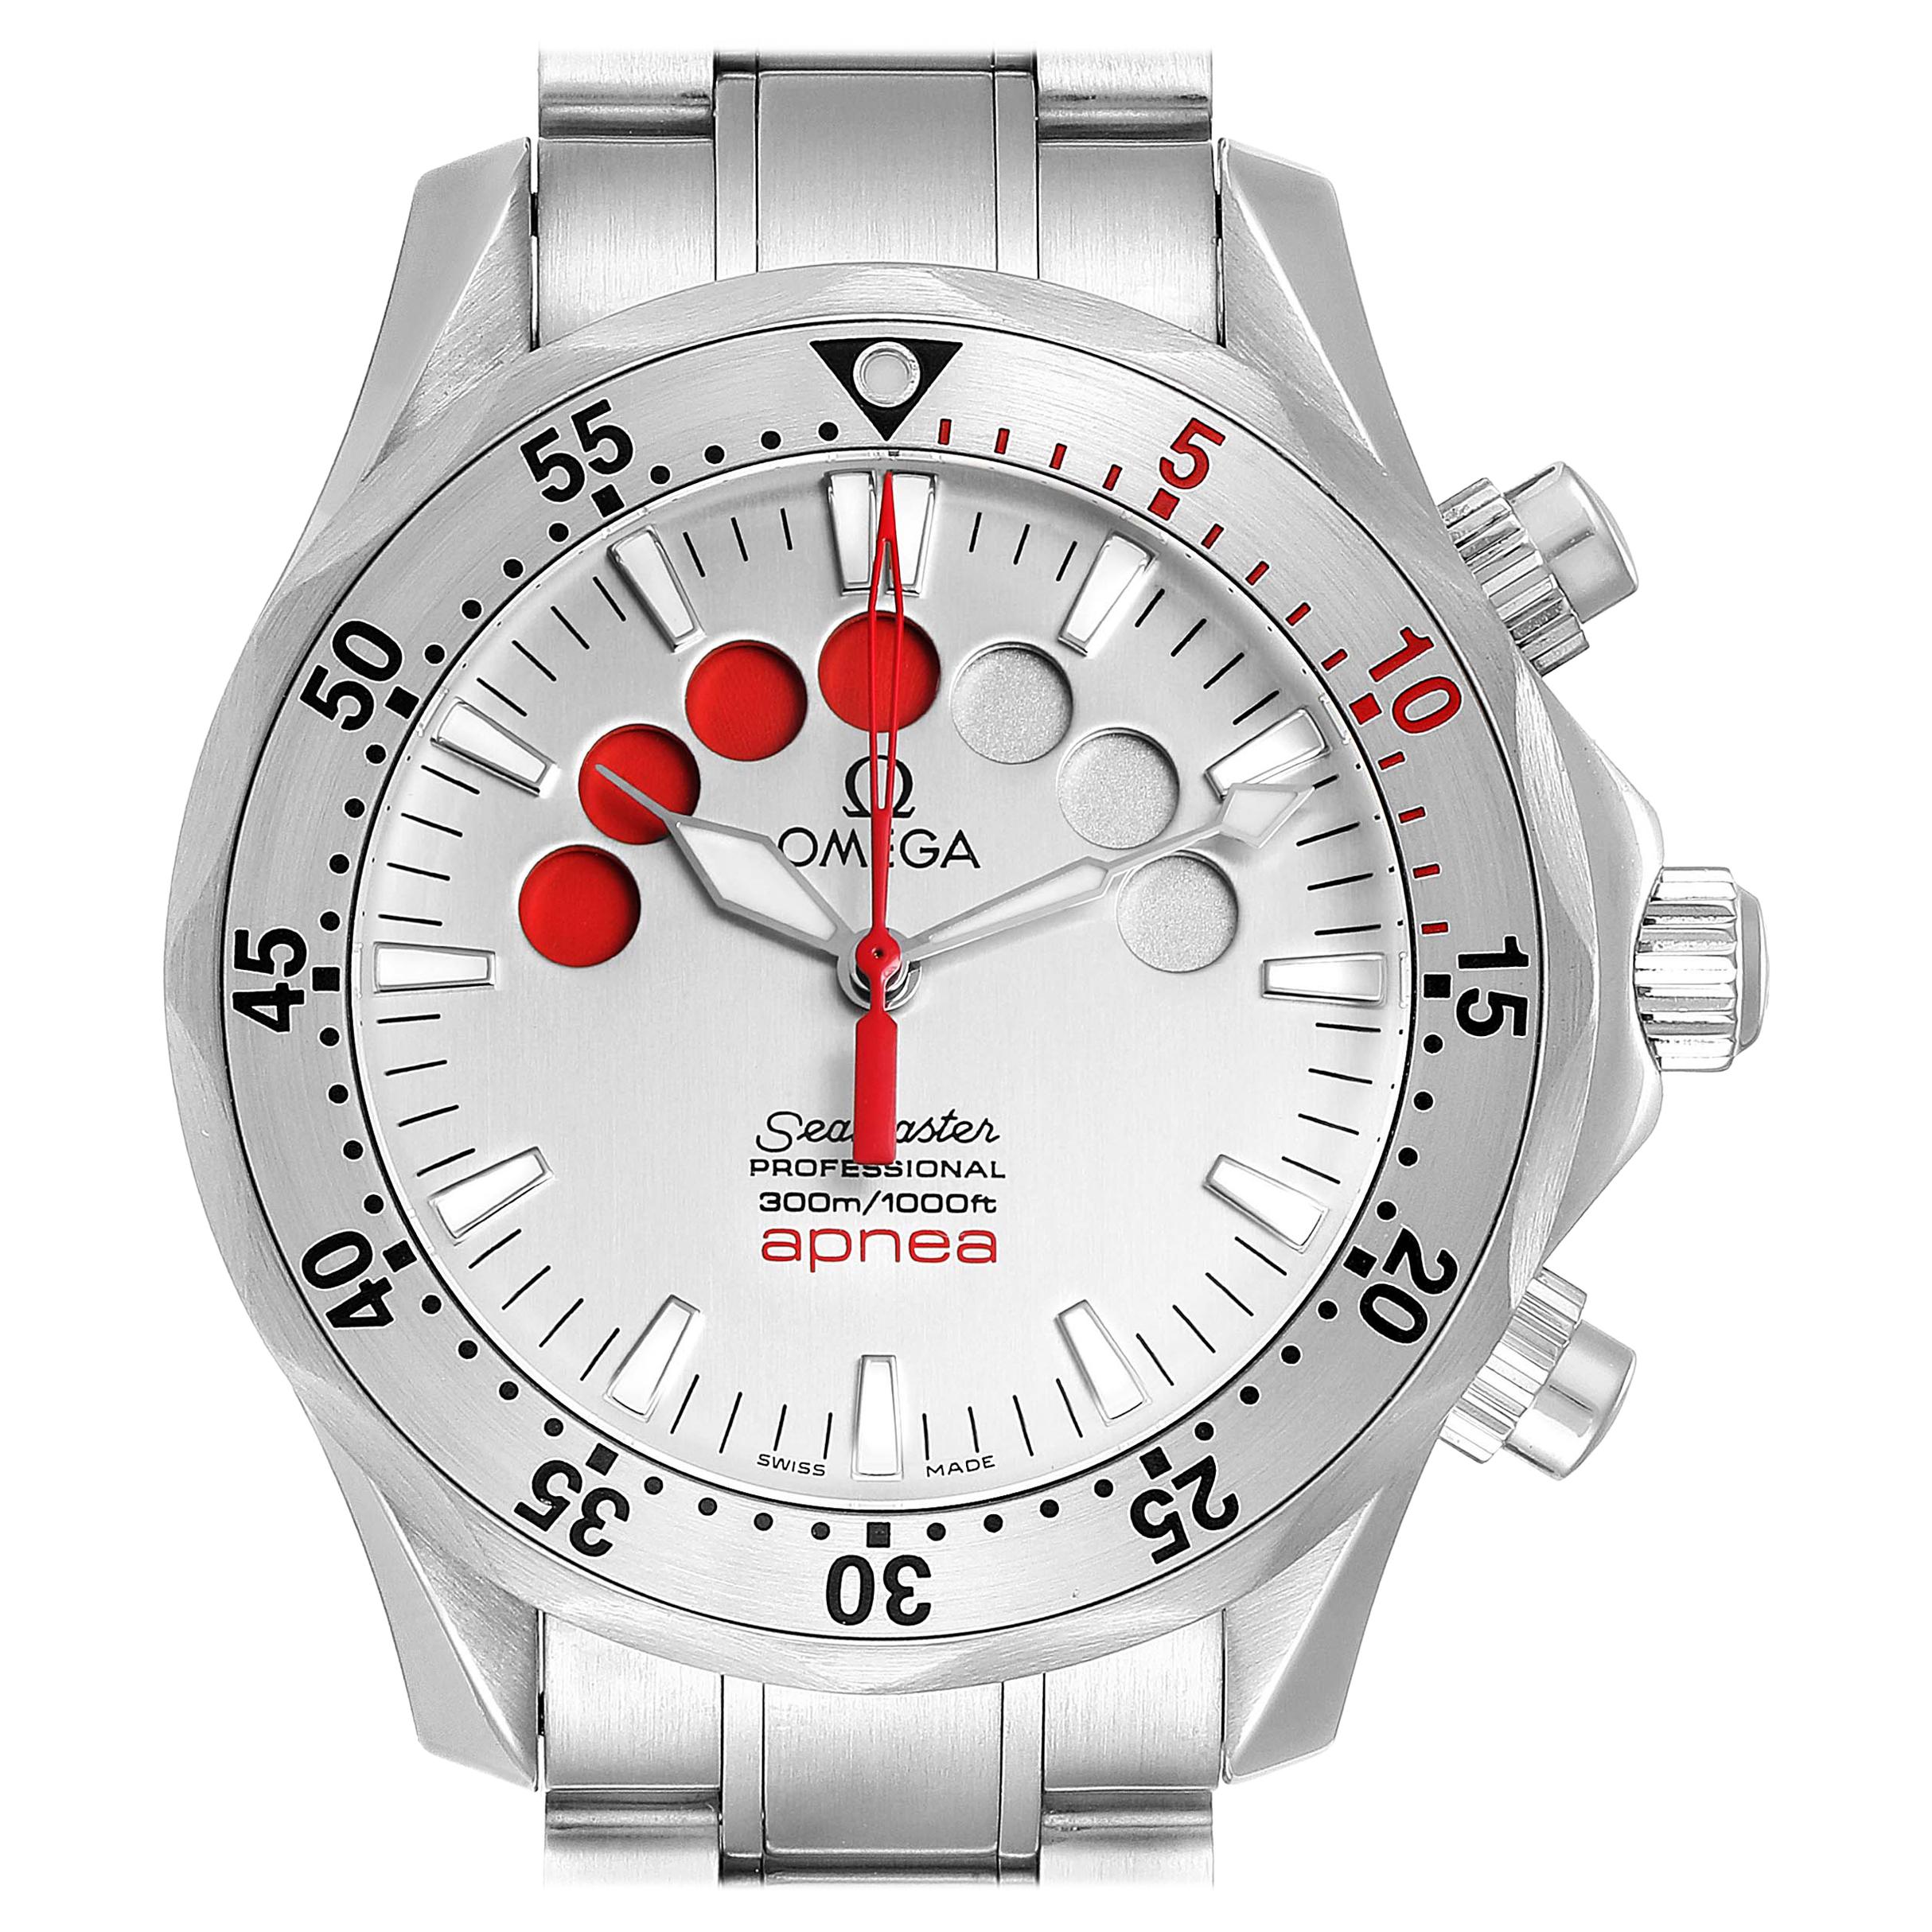 Omega Seamaster Apnea Jacques Mayol Silver Dial Men's Watch 2595.30.00